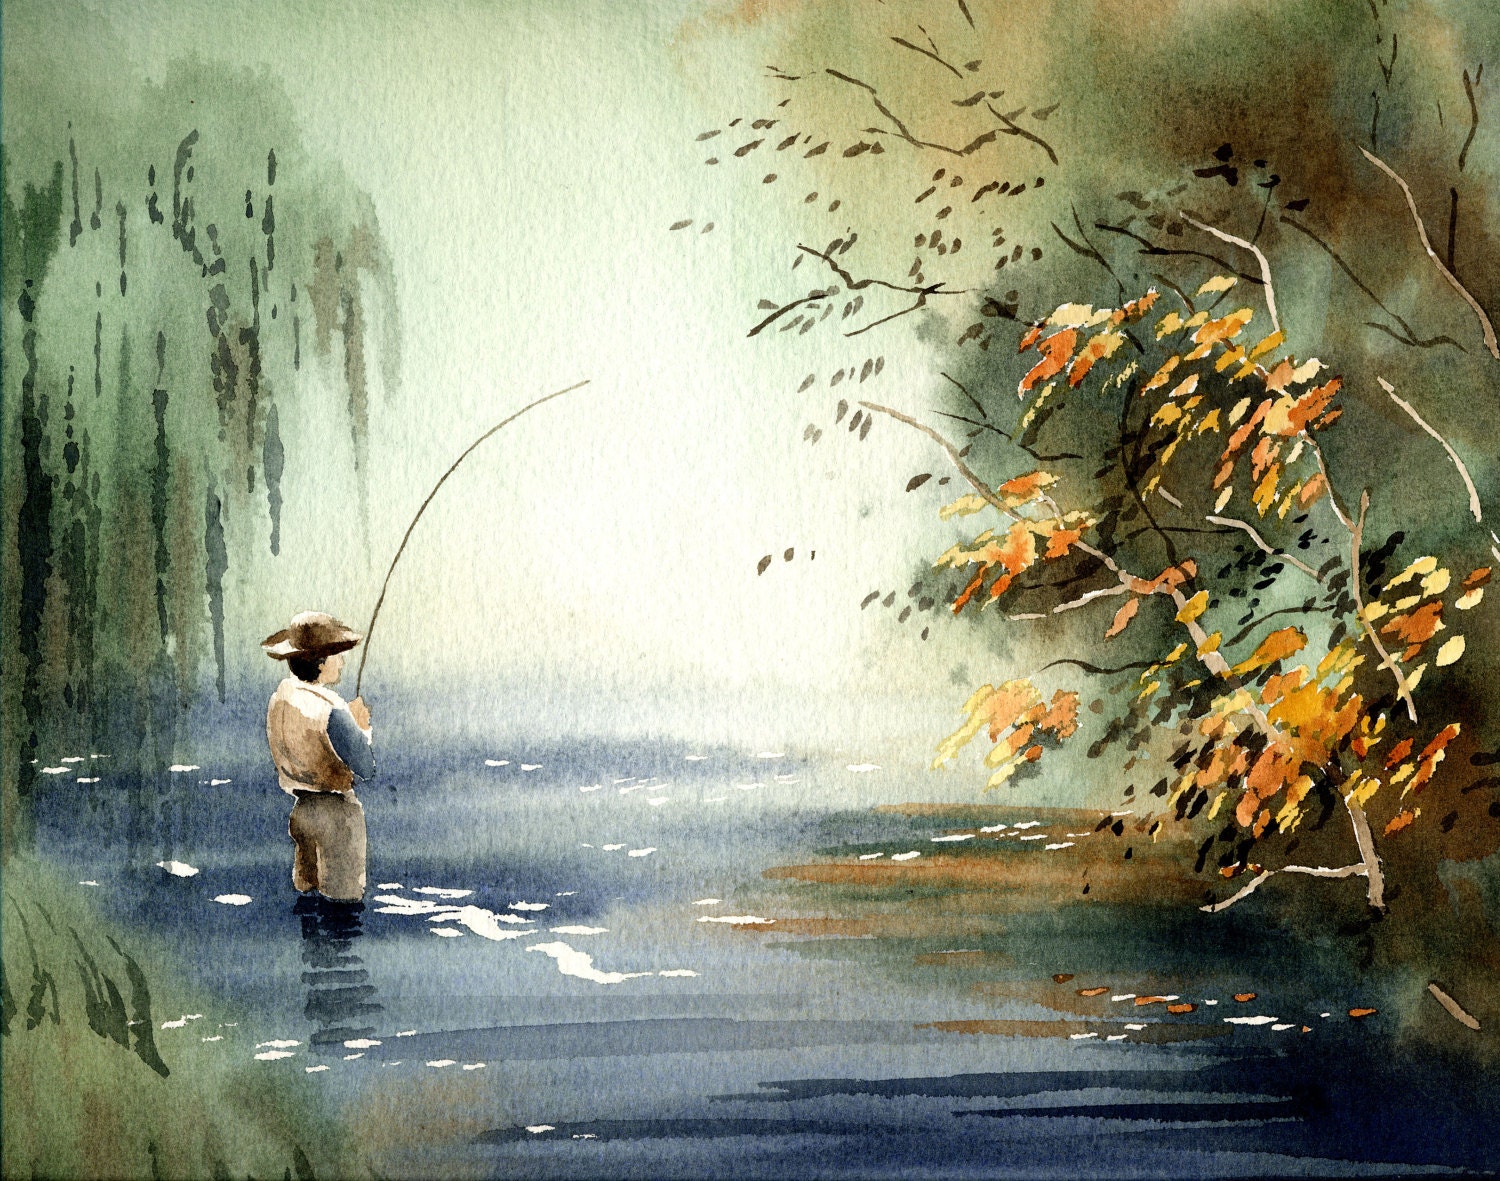 Fly fishing Art Print - Fall Fishing - Watercolor Painting - Angling Art  by Artist DJ Rogers - Wall Decor